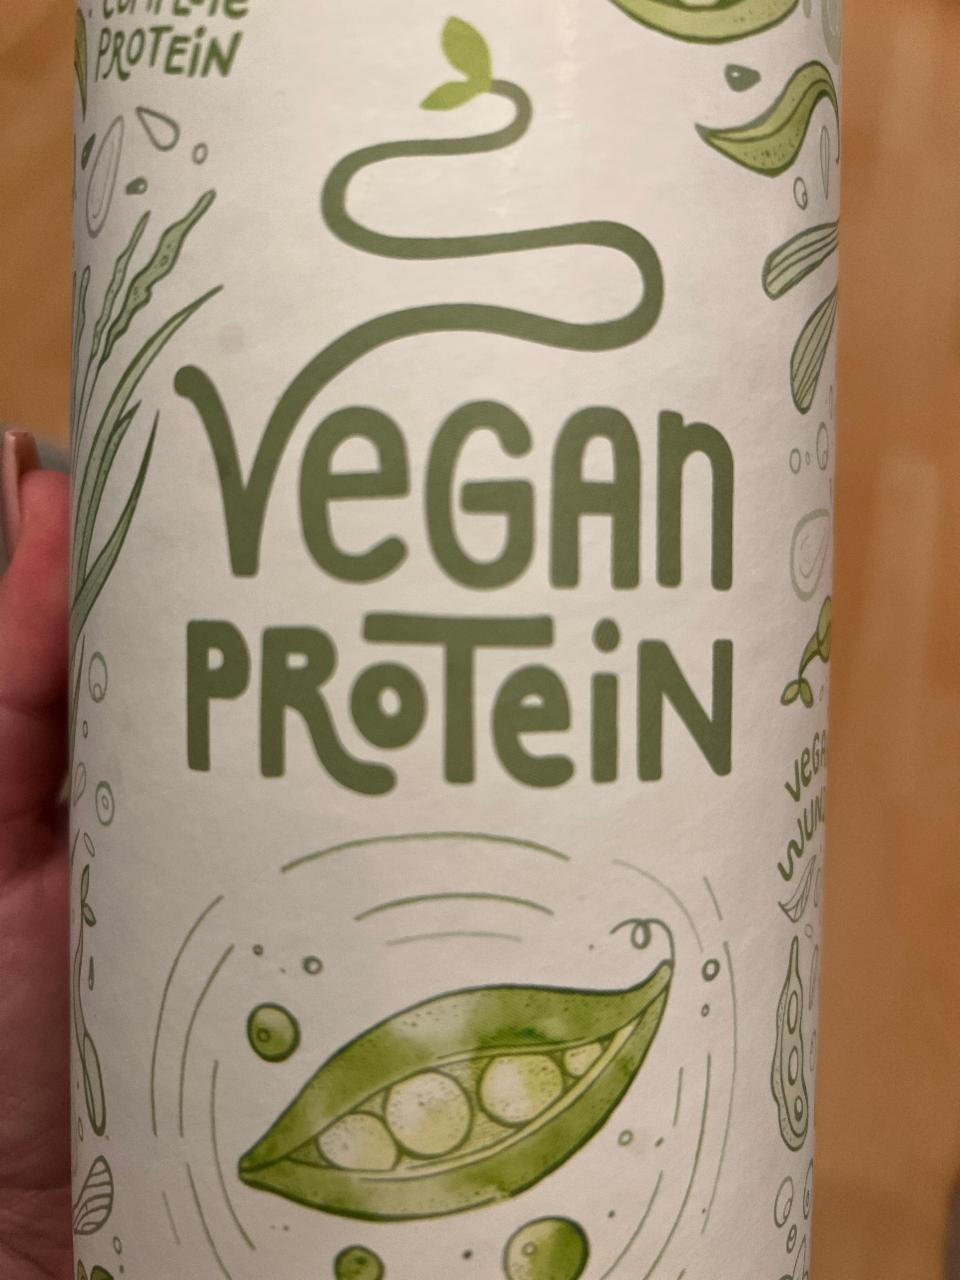 Fotografie - Vegan protein Unflavored Alpha Foods